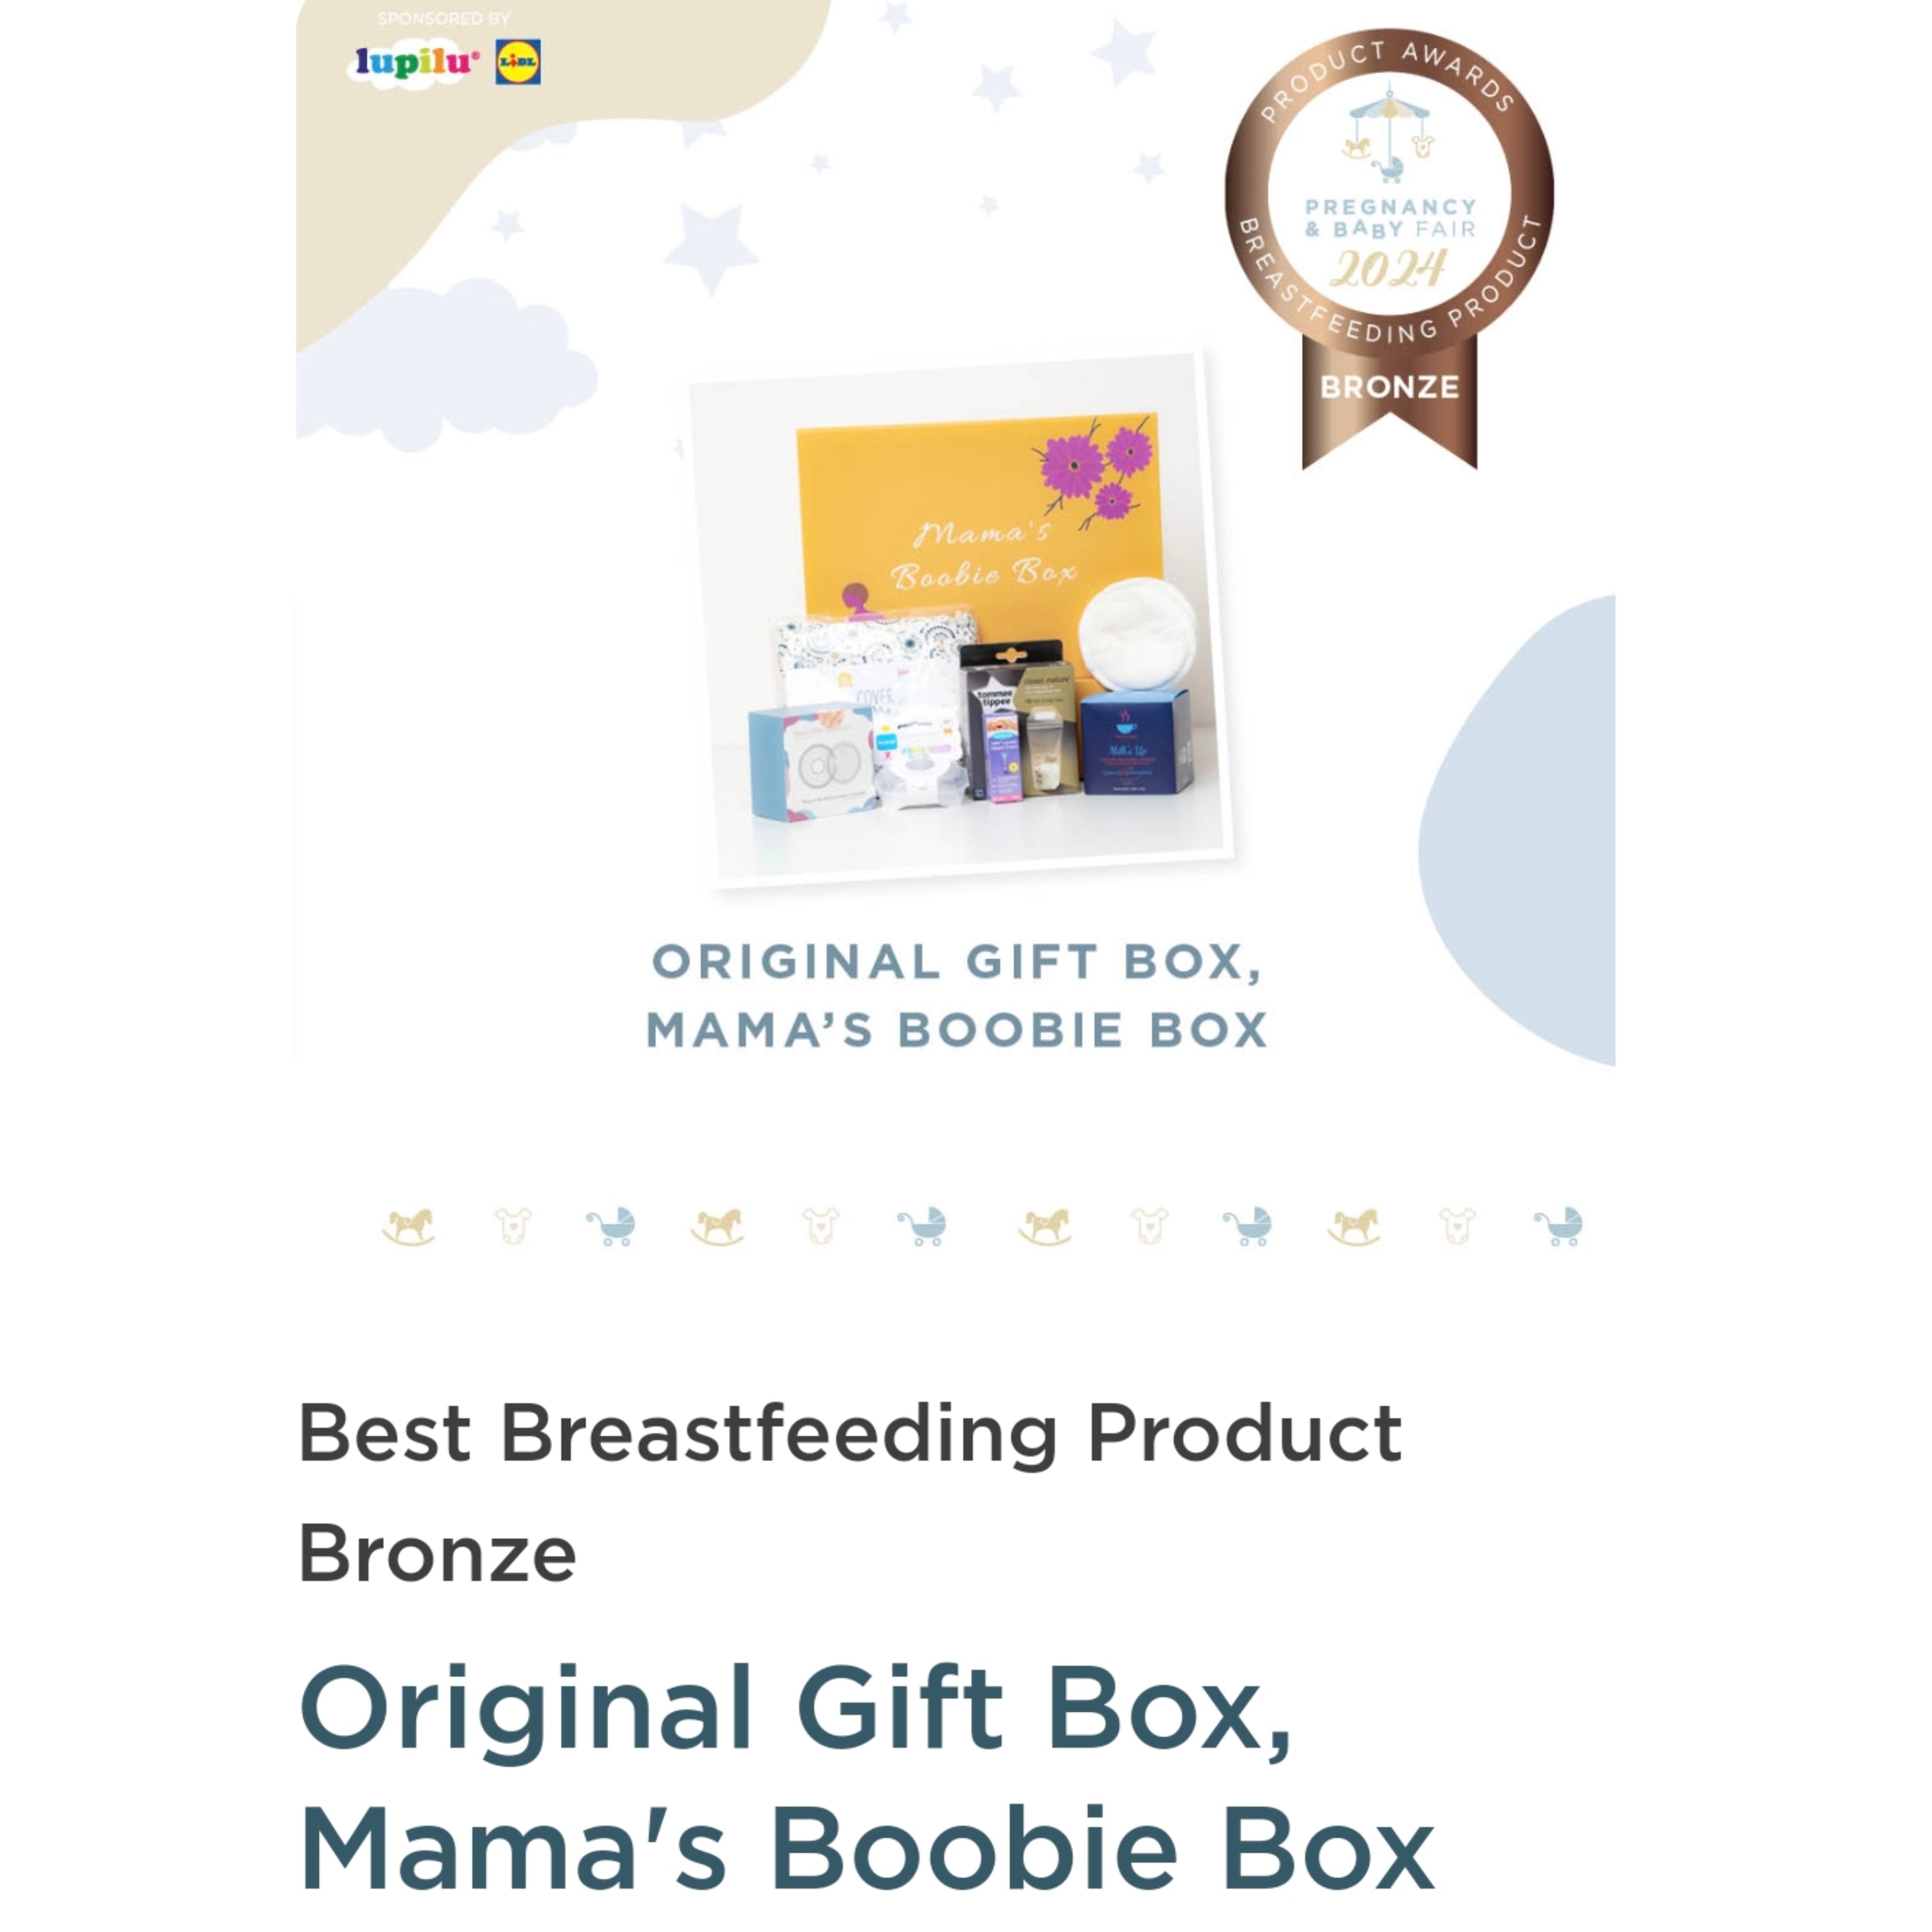 Bronze Award for Original Gift Box